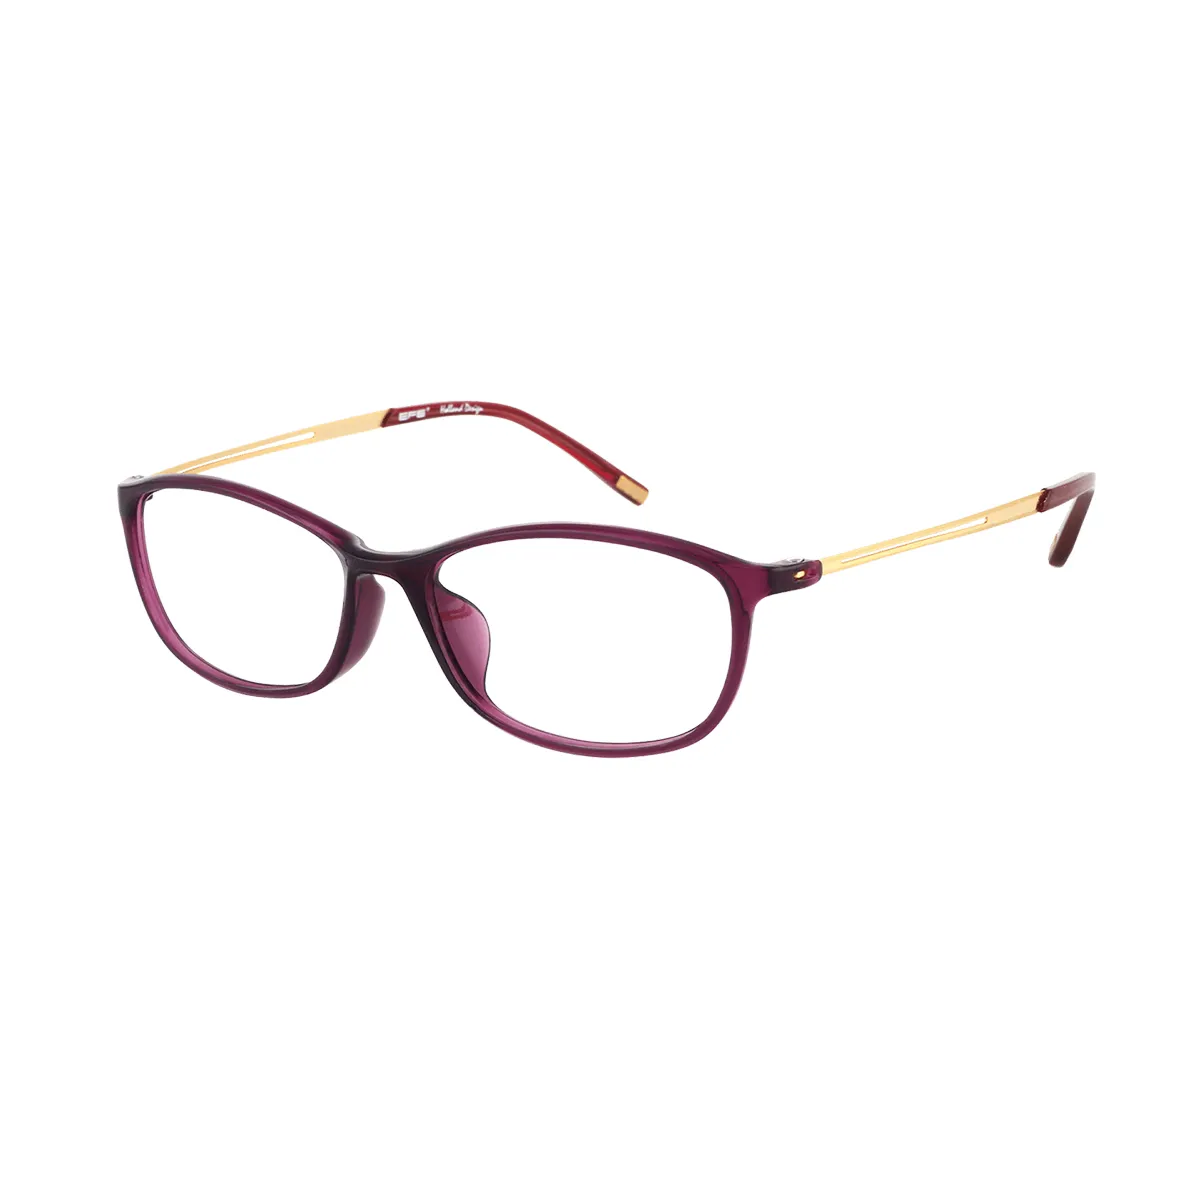 Reba - Oval Purple Glasses for Women